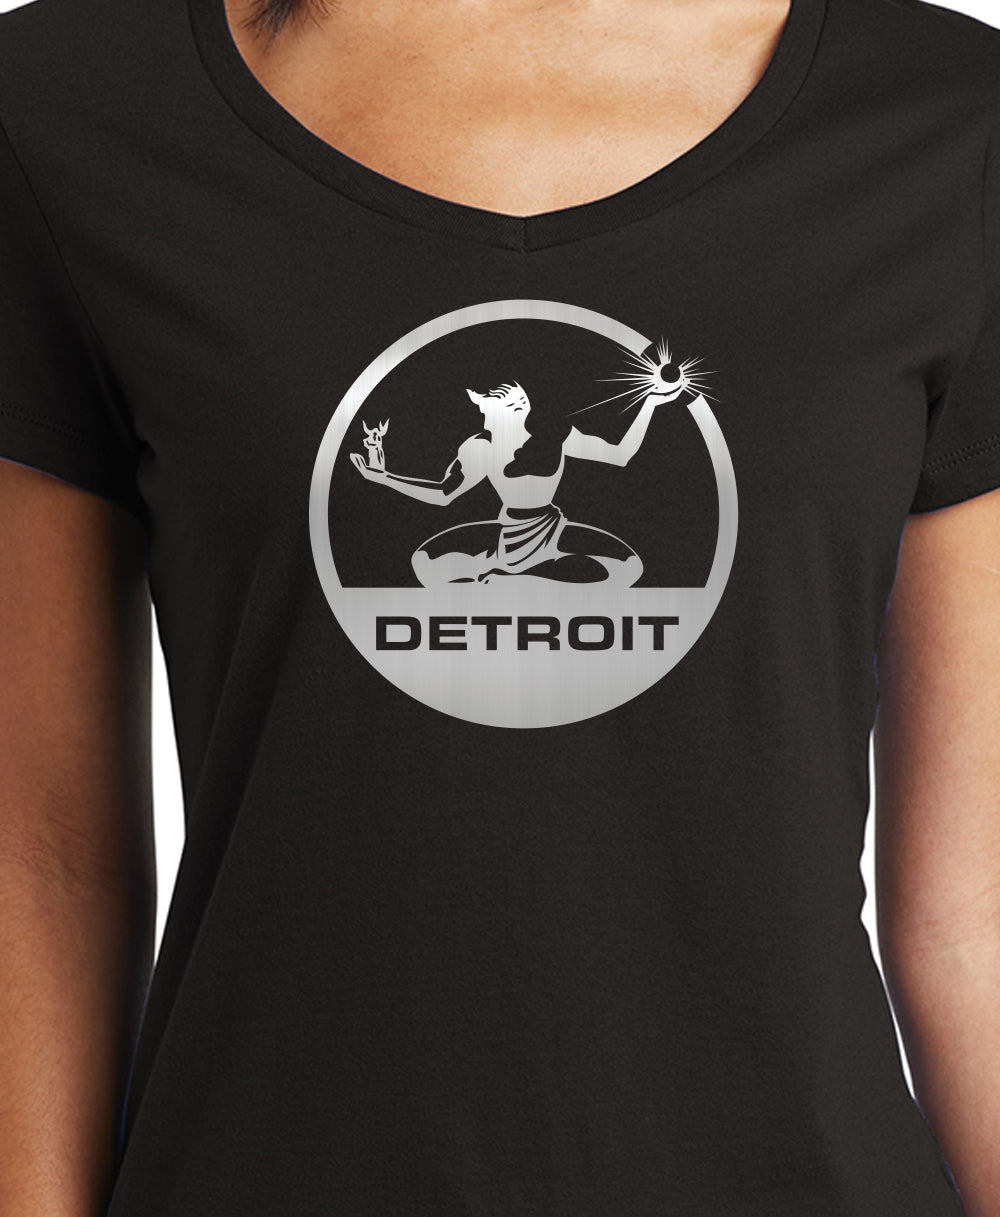 Spirit of Detroit Ladies Black Tee